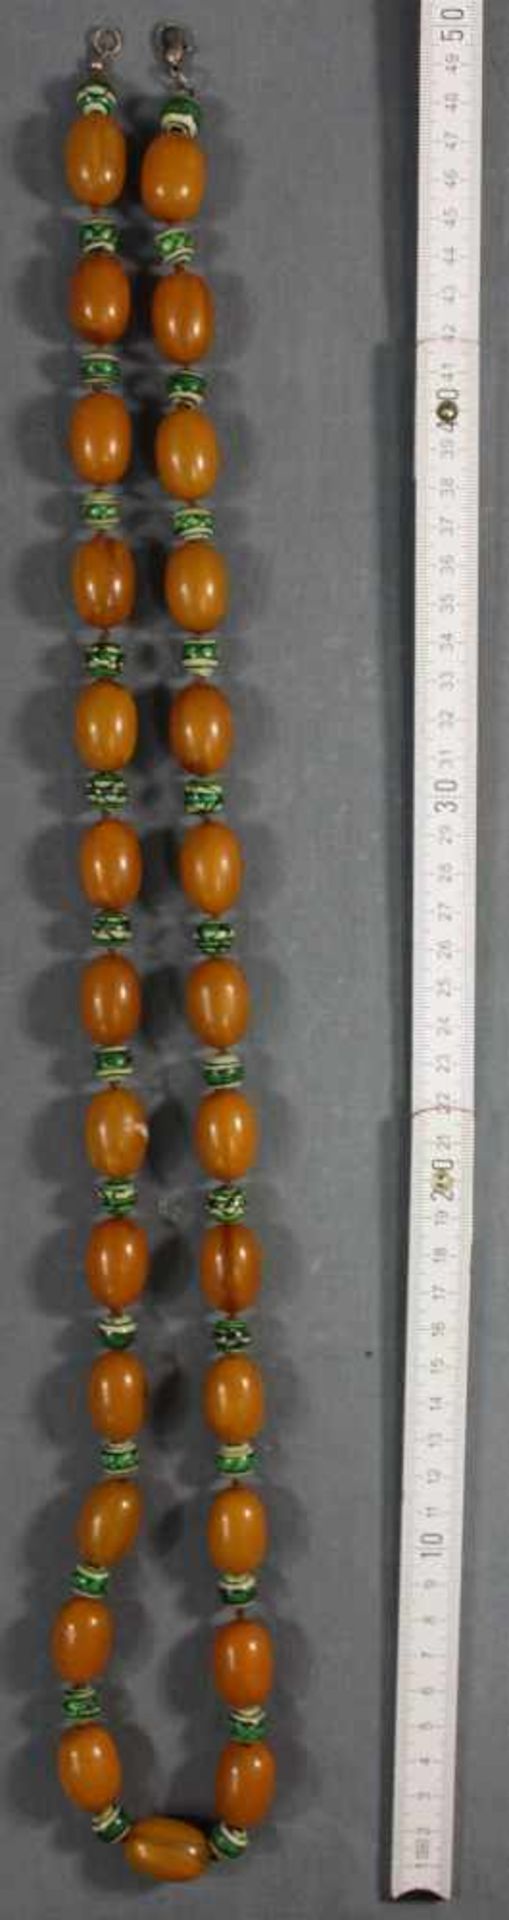 Amber necklace with additional green balls. - Bild 4 aus 5